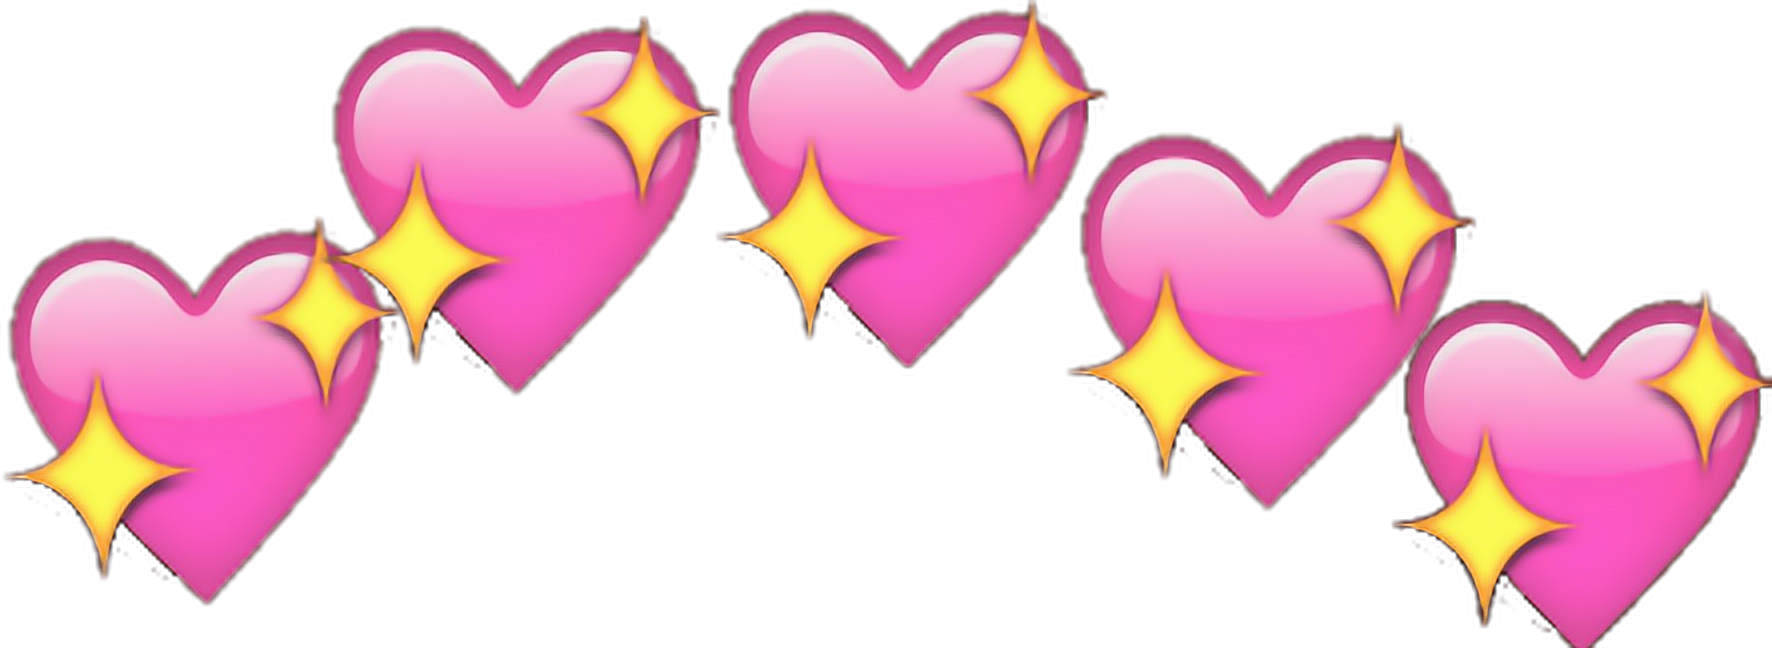 Immagine Trasparente di PNG del cuore emoji rosa